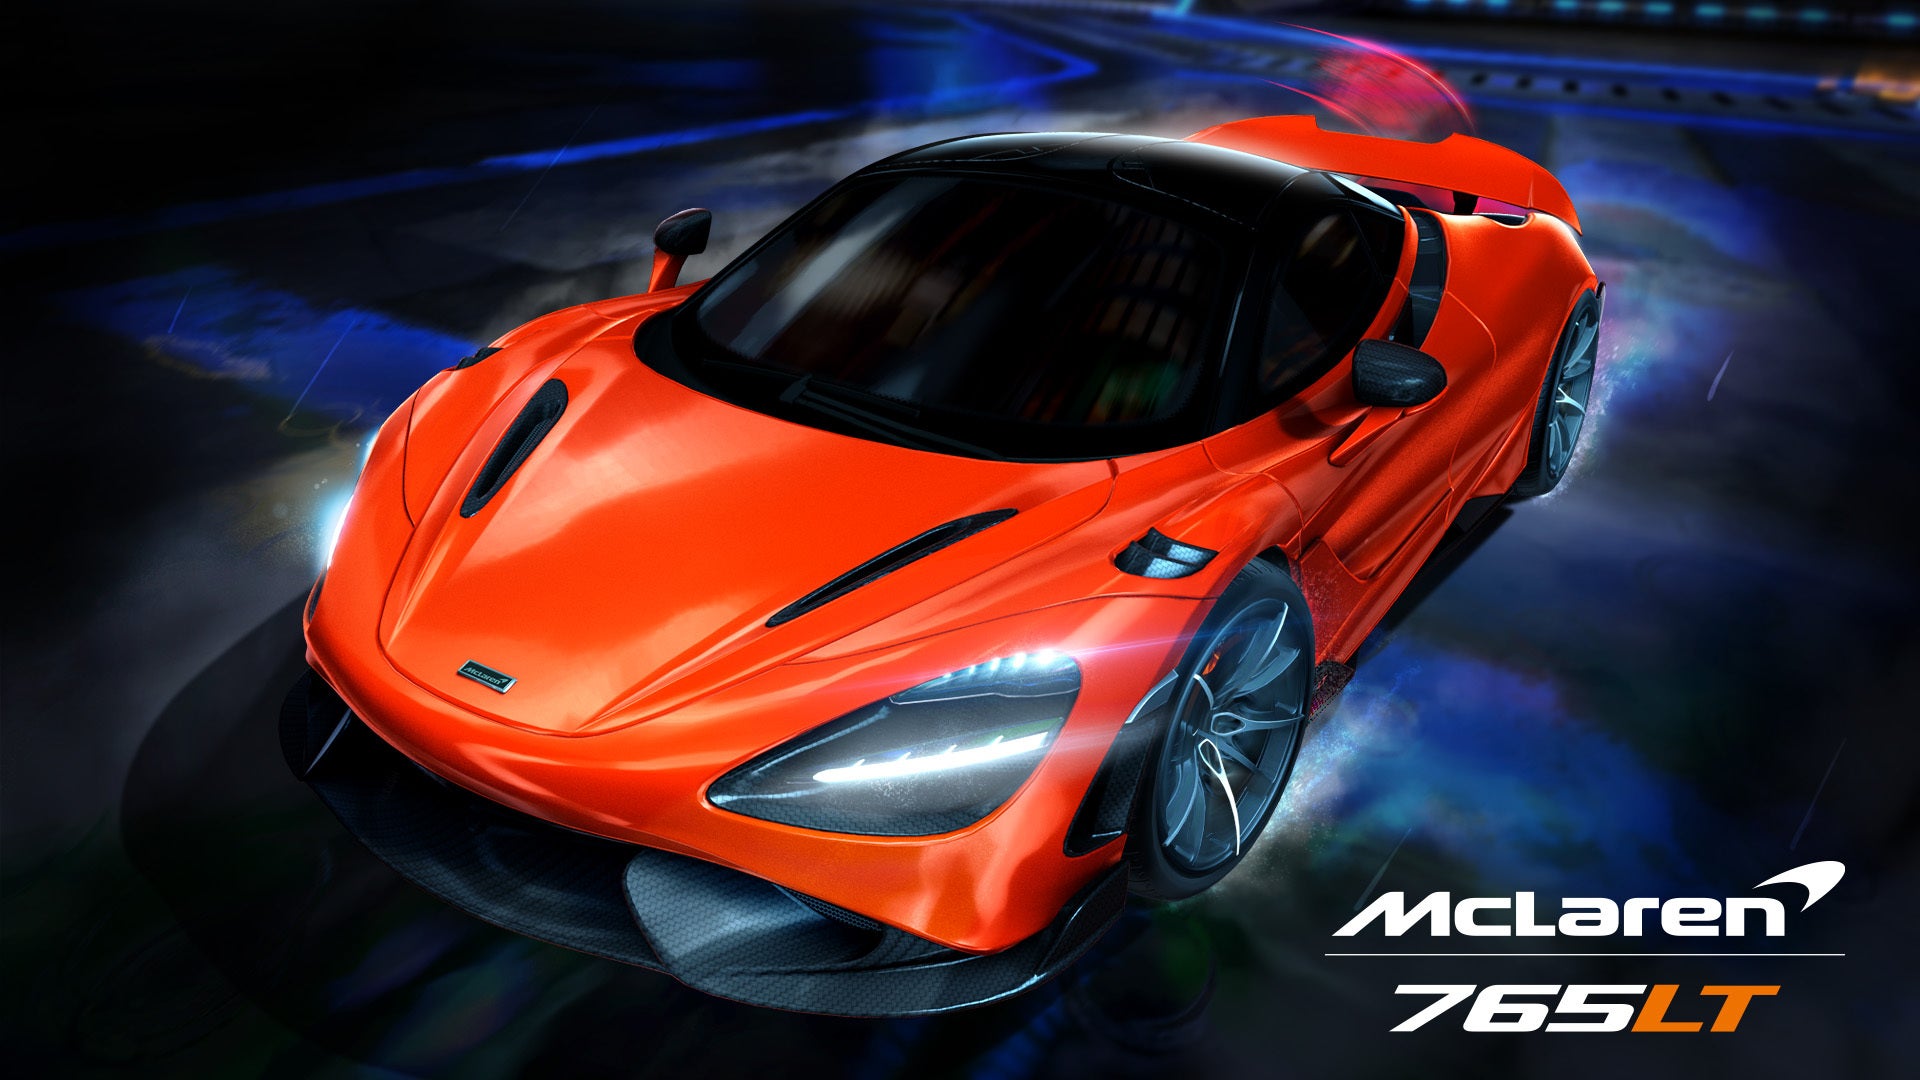 https://rocketleague.media.zestyio.com/McLaren-765LT-Logoless.jpg